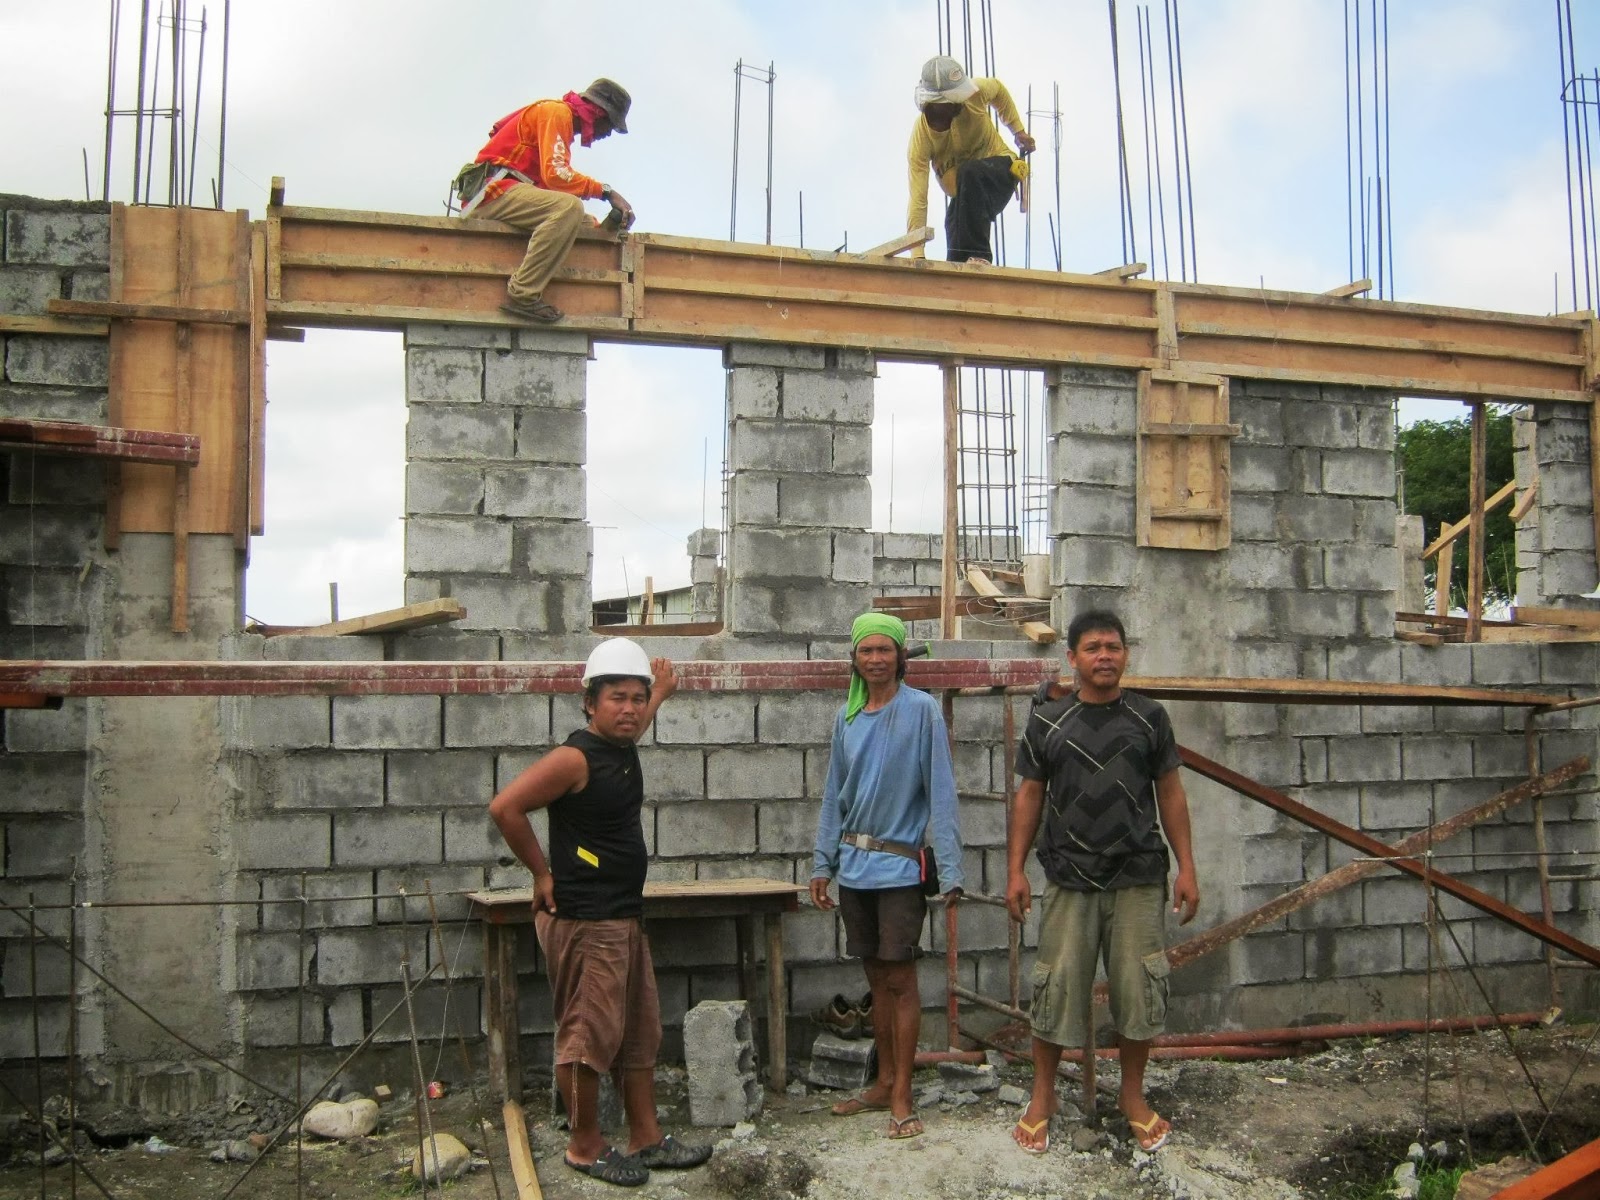 Savannah Trails House Construction Project In Oton Iloilo